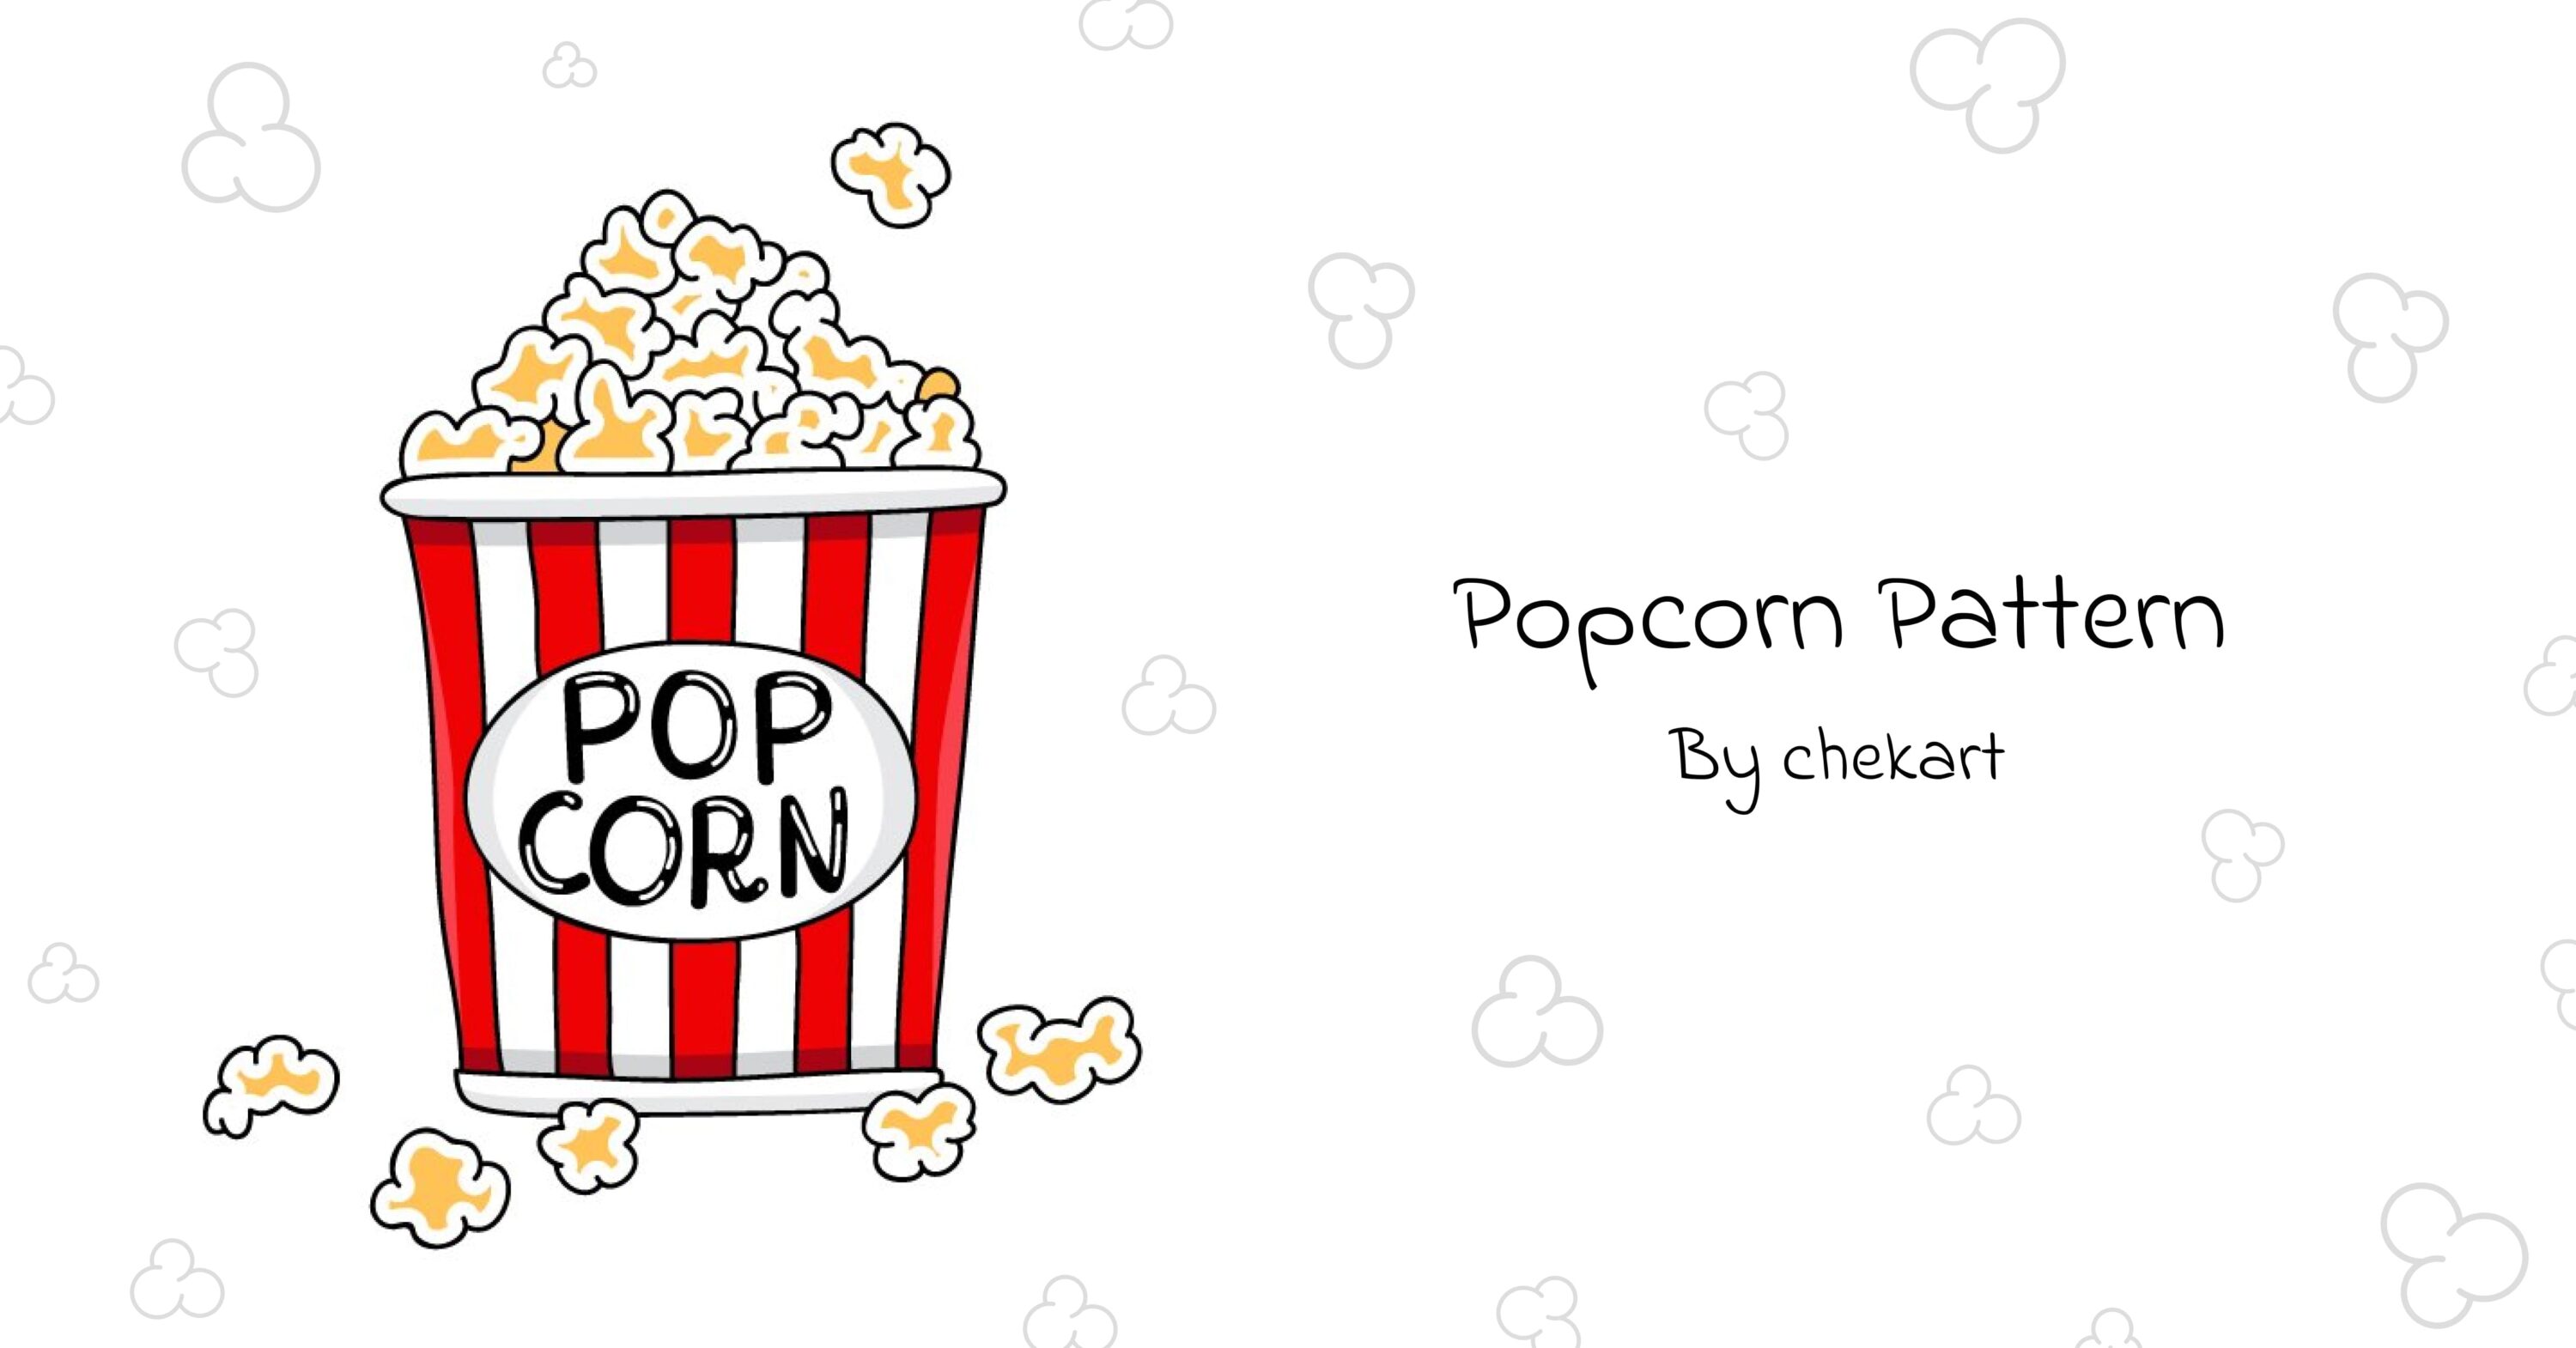 Classic high quality popcorn illustration.